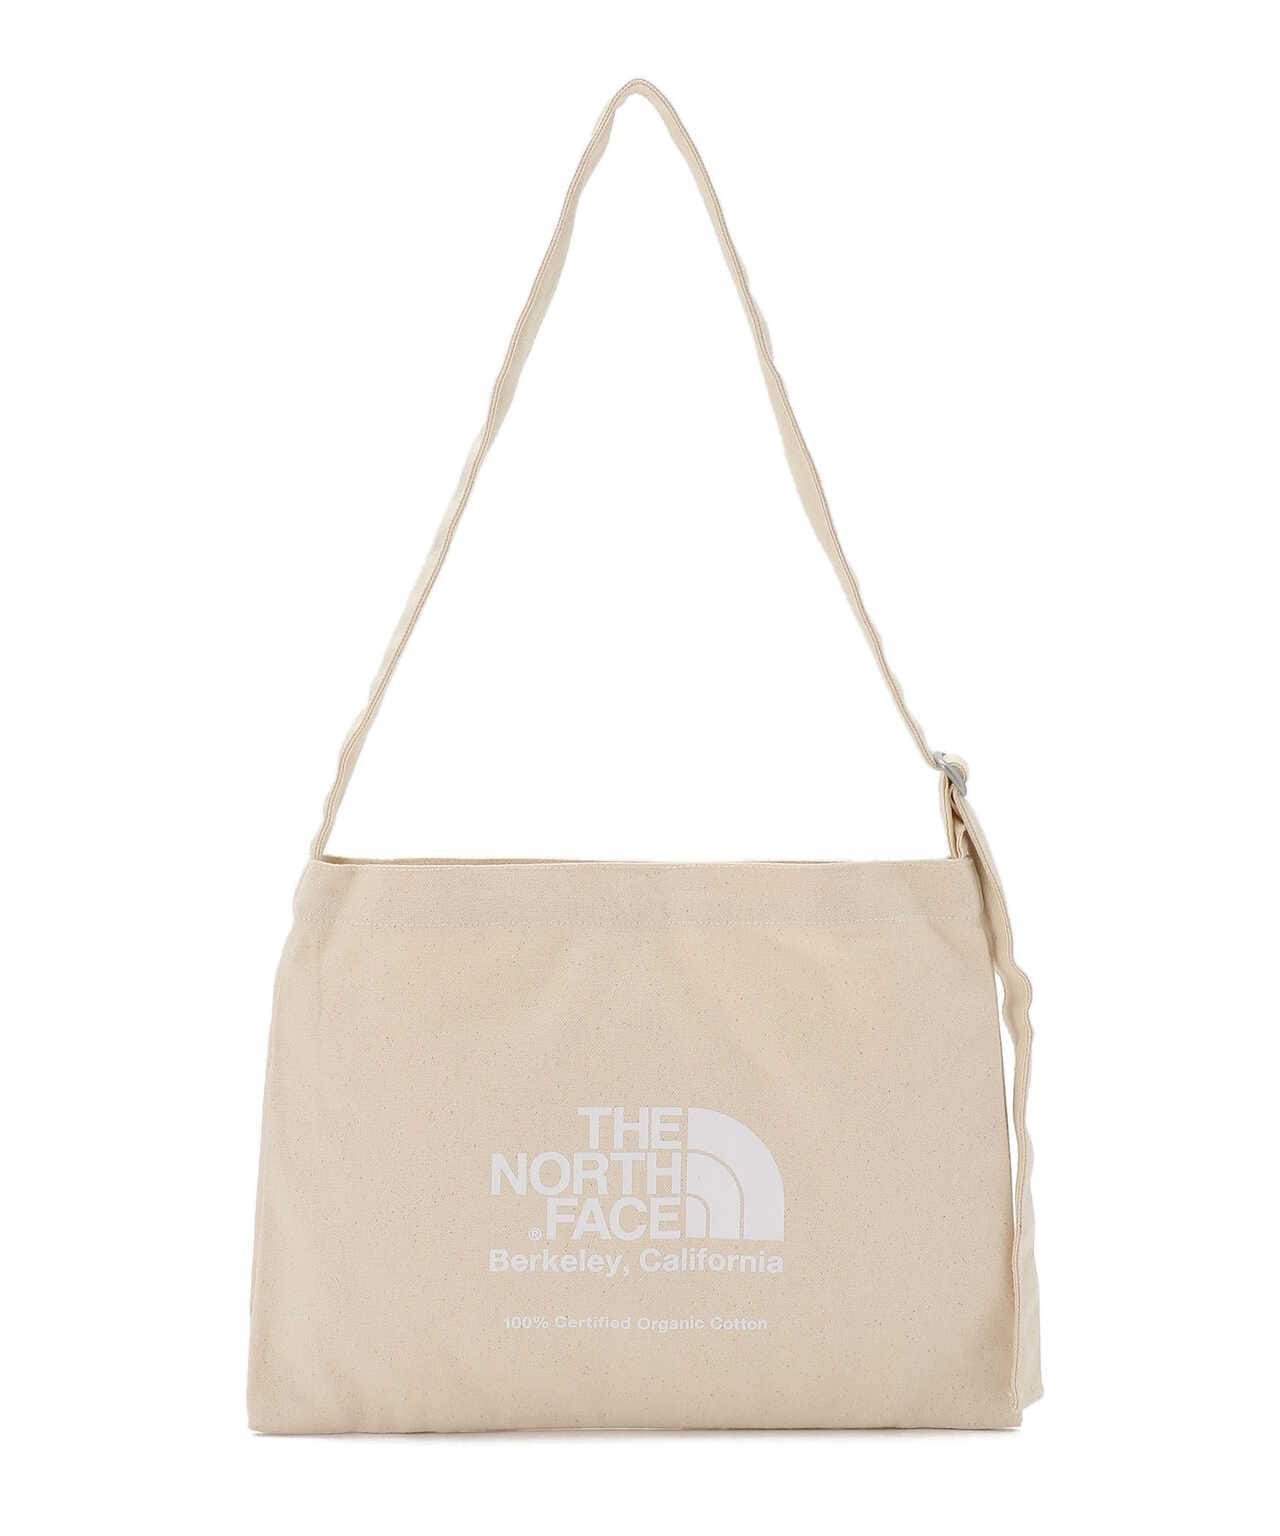 THE NORTH FACE/ザ ノース フェイス/Musette Bag/ミュゼットバッグ